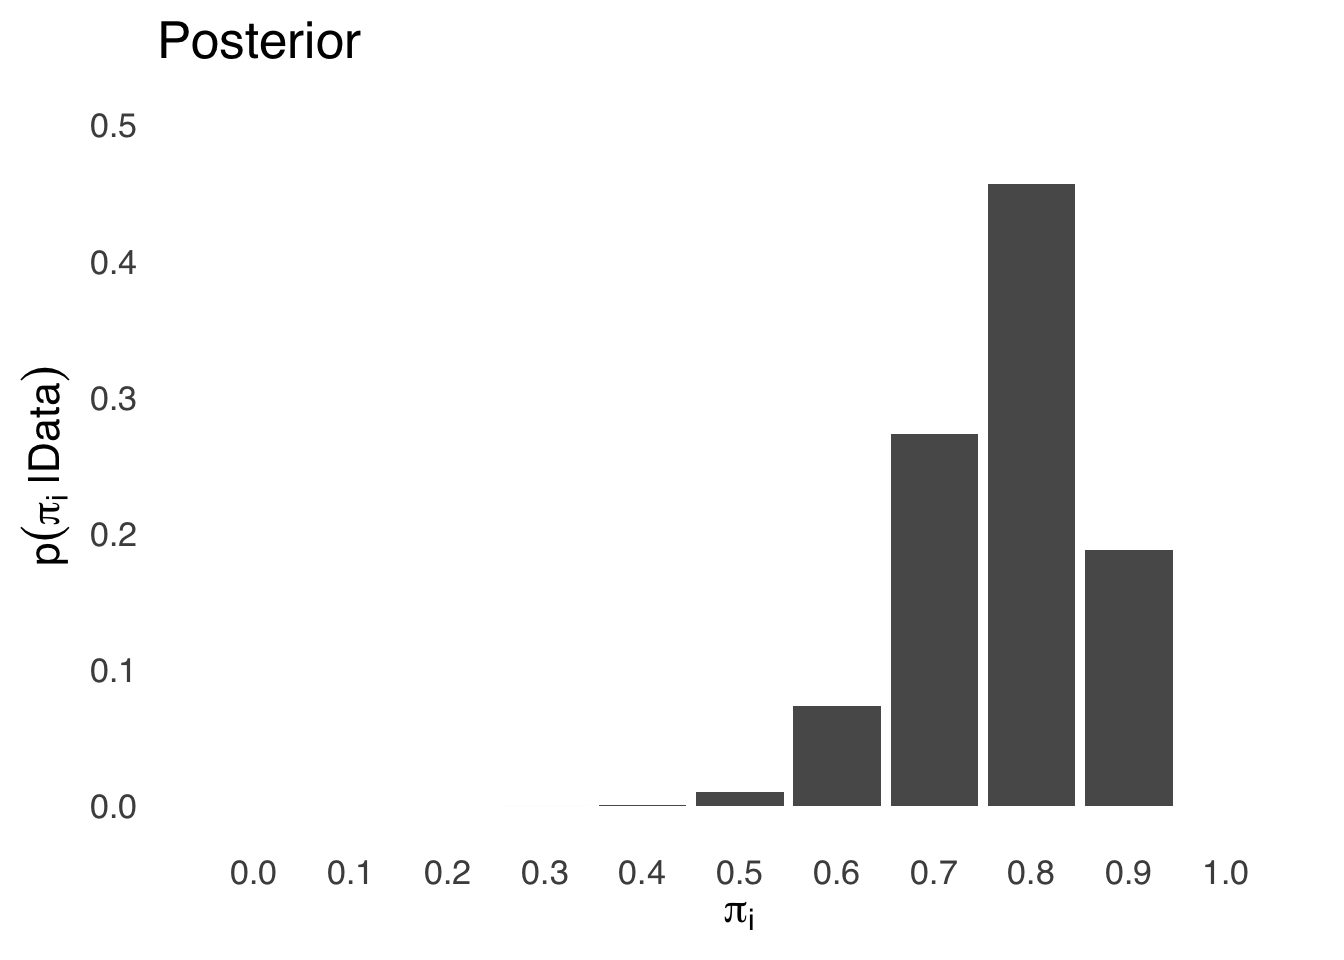 Posterior Probability Distribution for $\pi_i$